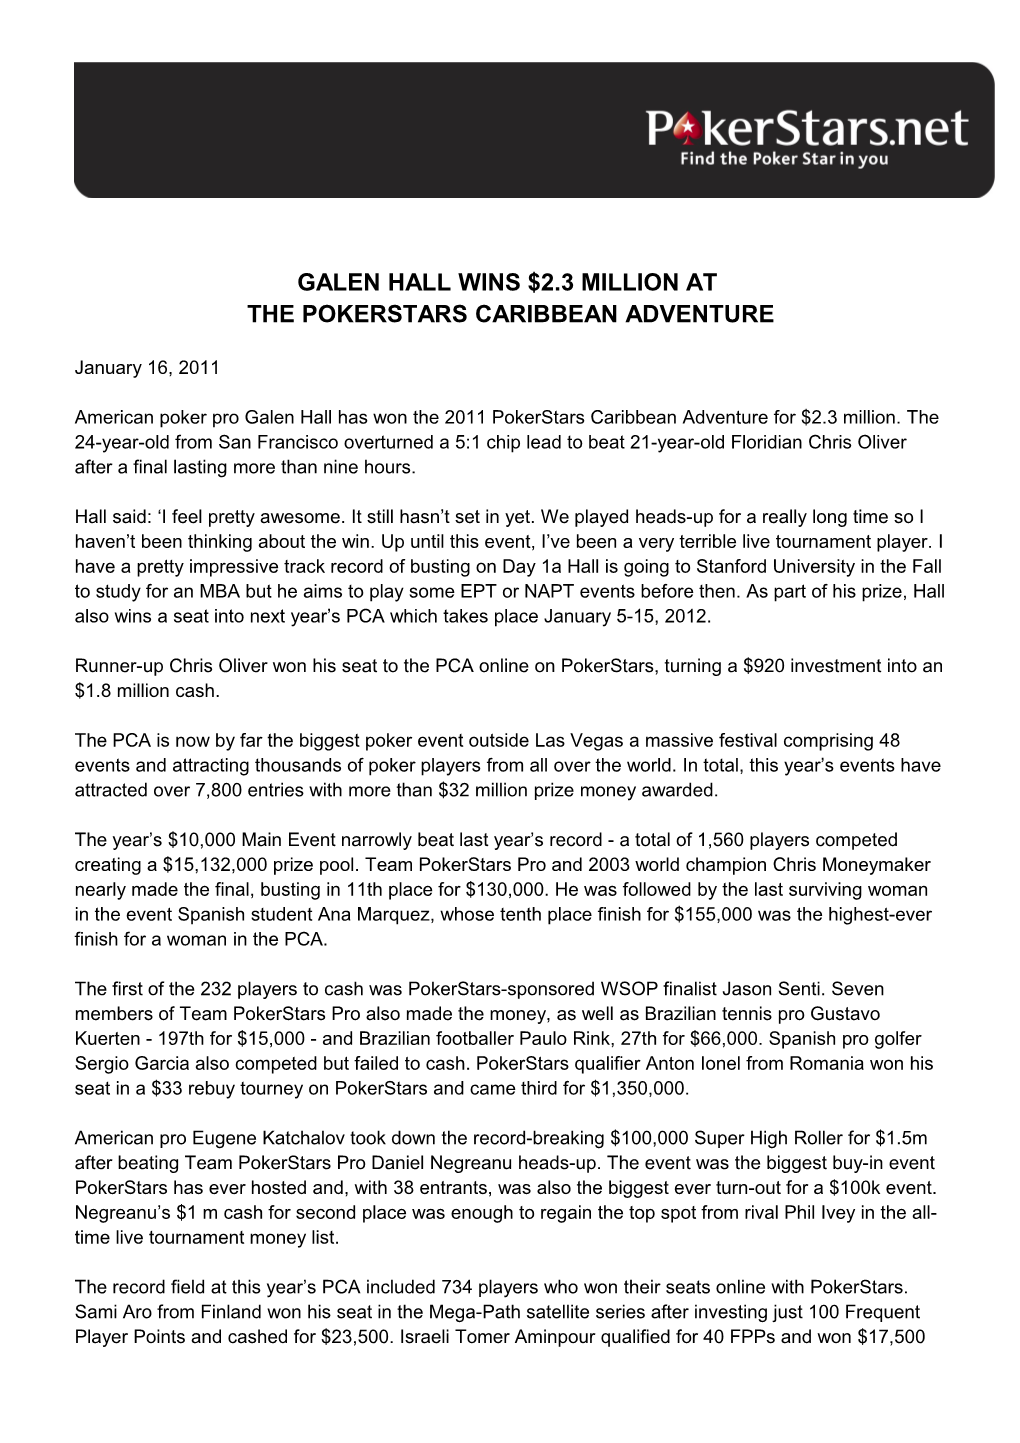 Galen Hall Wins $2.3 Million at the Pokerstars Caribbean Adventure